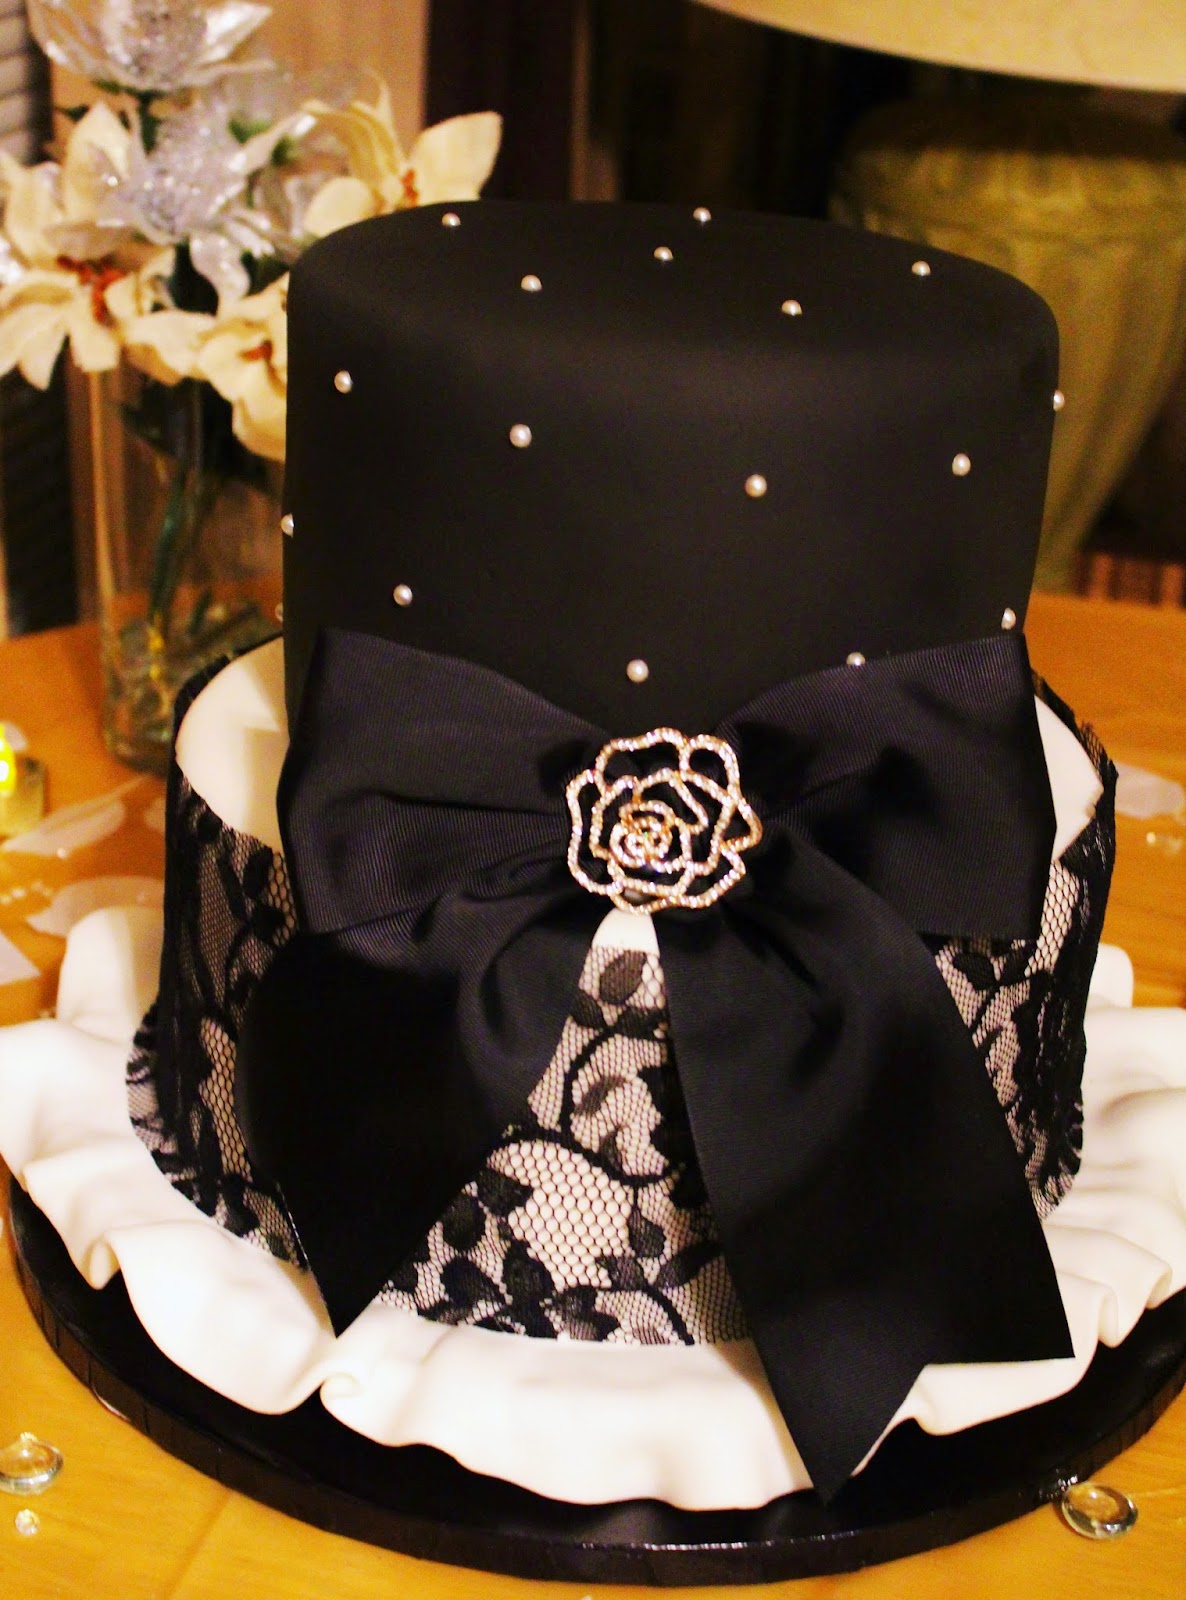 Blog as you Bake: Dark Chocolate and White Chocolate Bridal Shower Cake